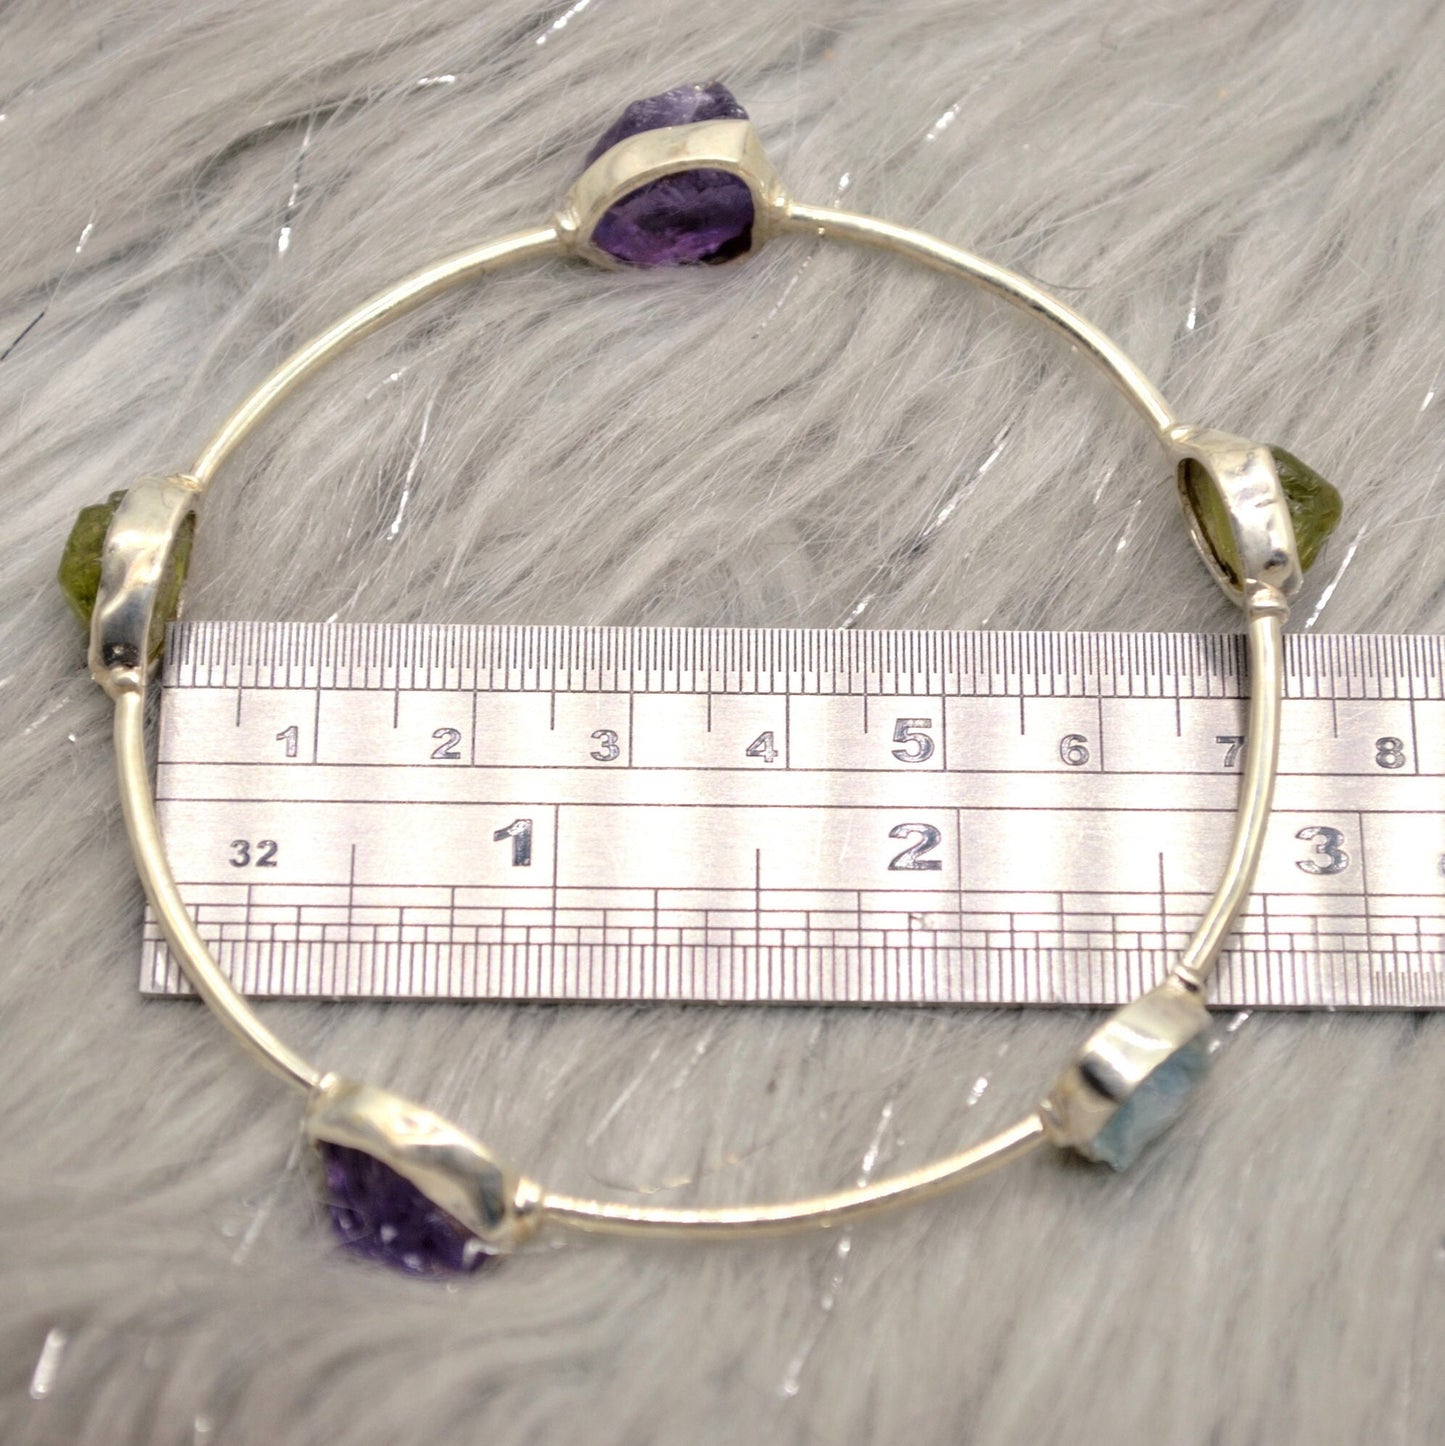 Amethyst, Peridot, Aquamarine Bangle Bracelet, Multi Coloured Raw Gemstone Silver Bracelet, Birthstone Bangle For Women, 7 cm Diameter